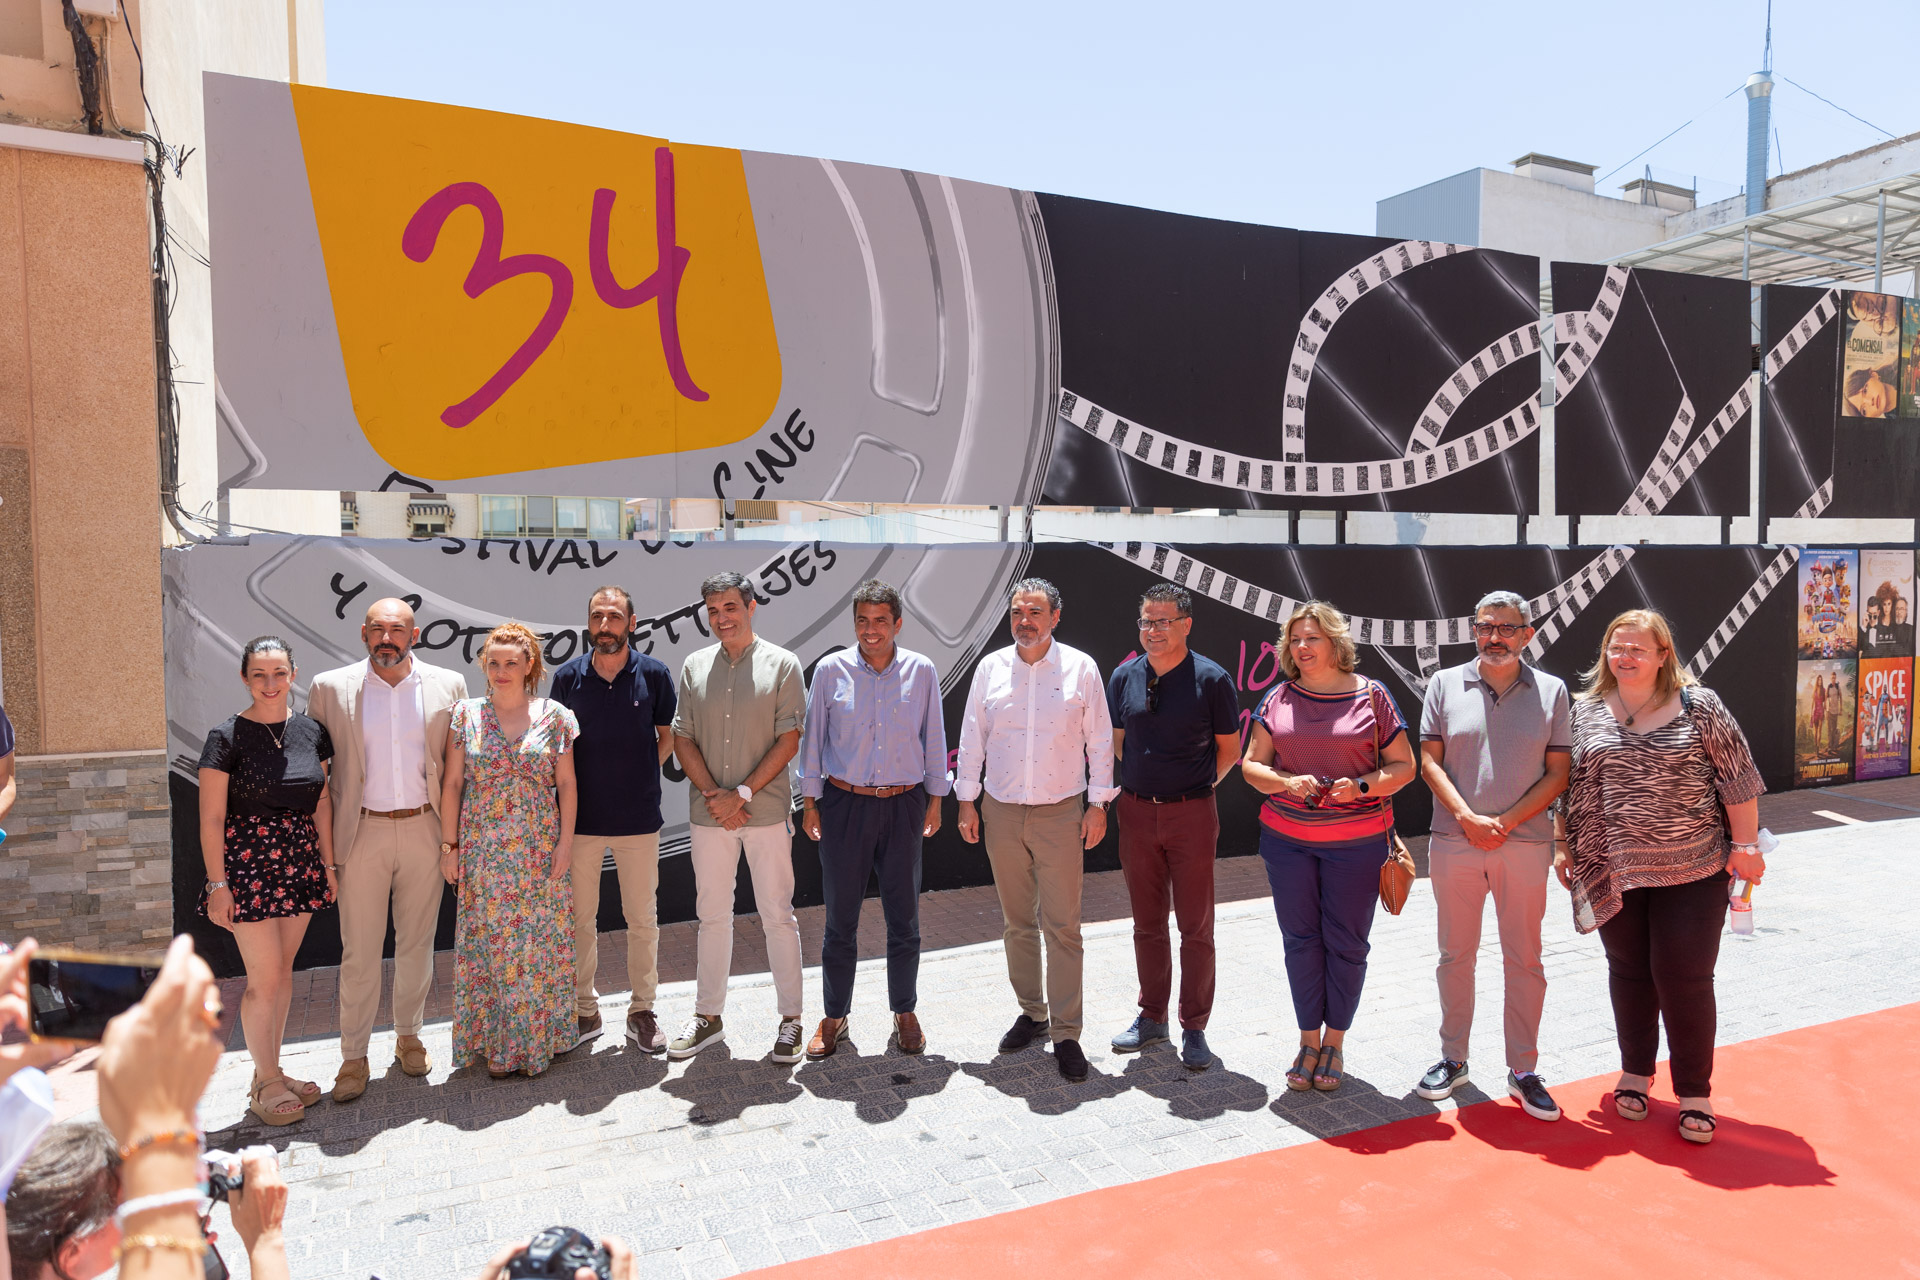 Festival Cine_presentacion homenajeados 34 festival cine de l alfas del pi y firma convenio diputacion (2)